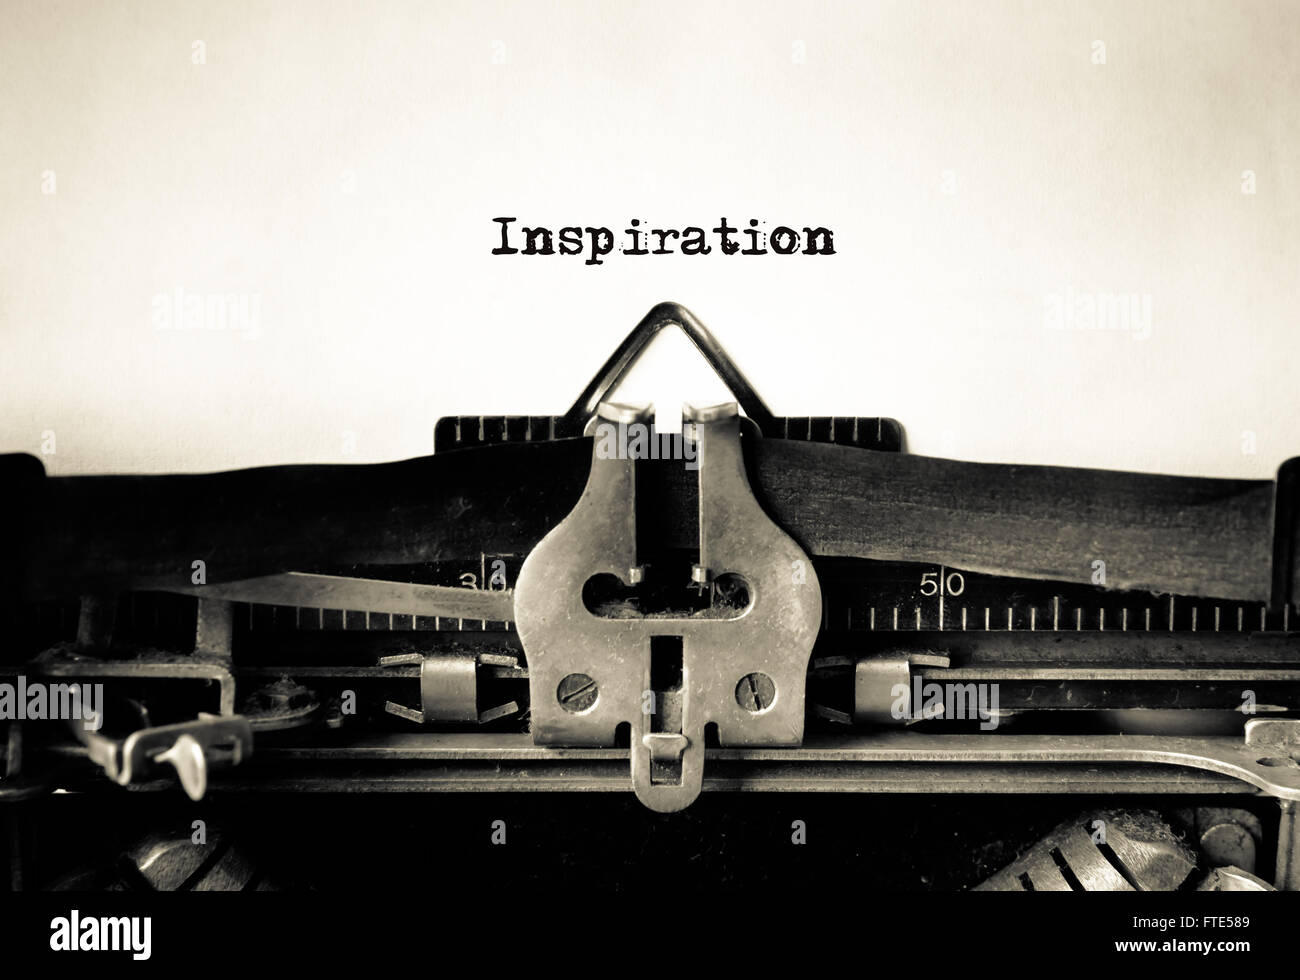 Inspiration message typed on vintage typewriter Stock Photo